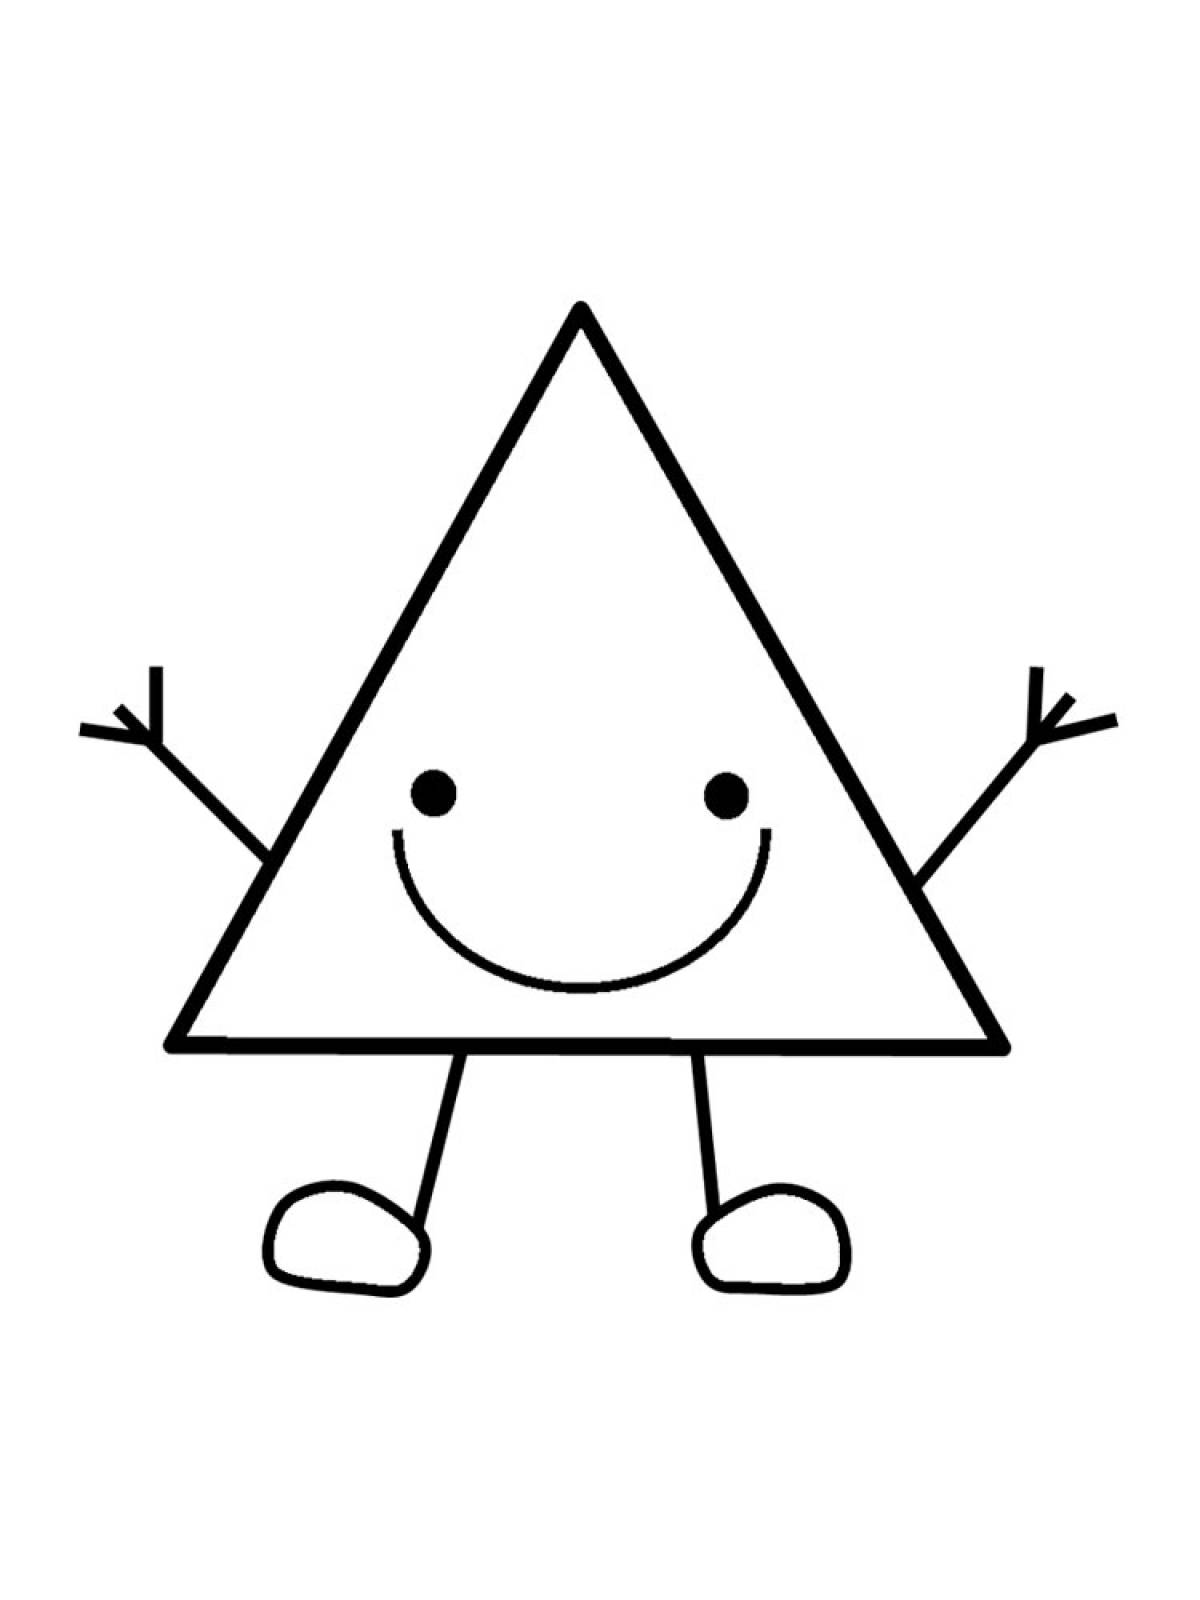 Triangle 1